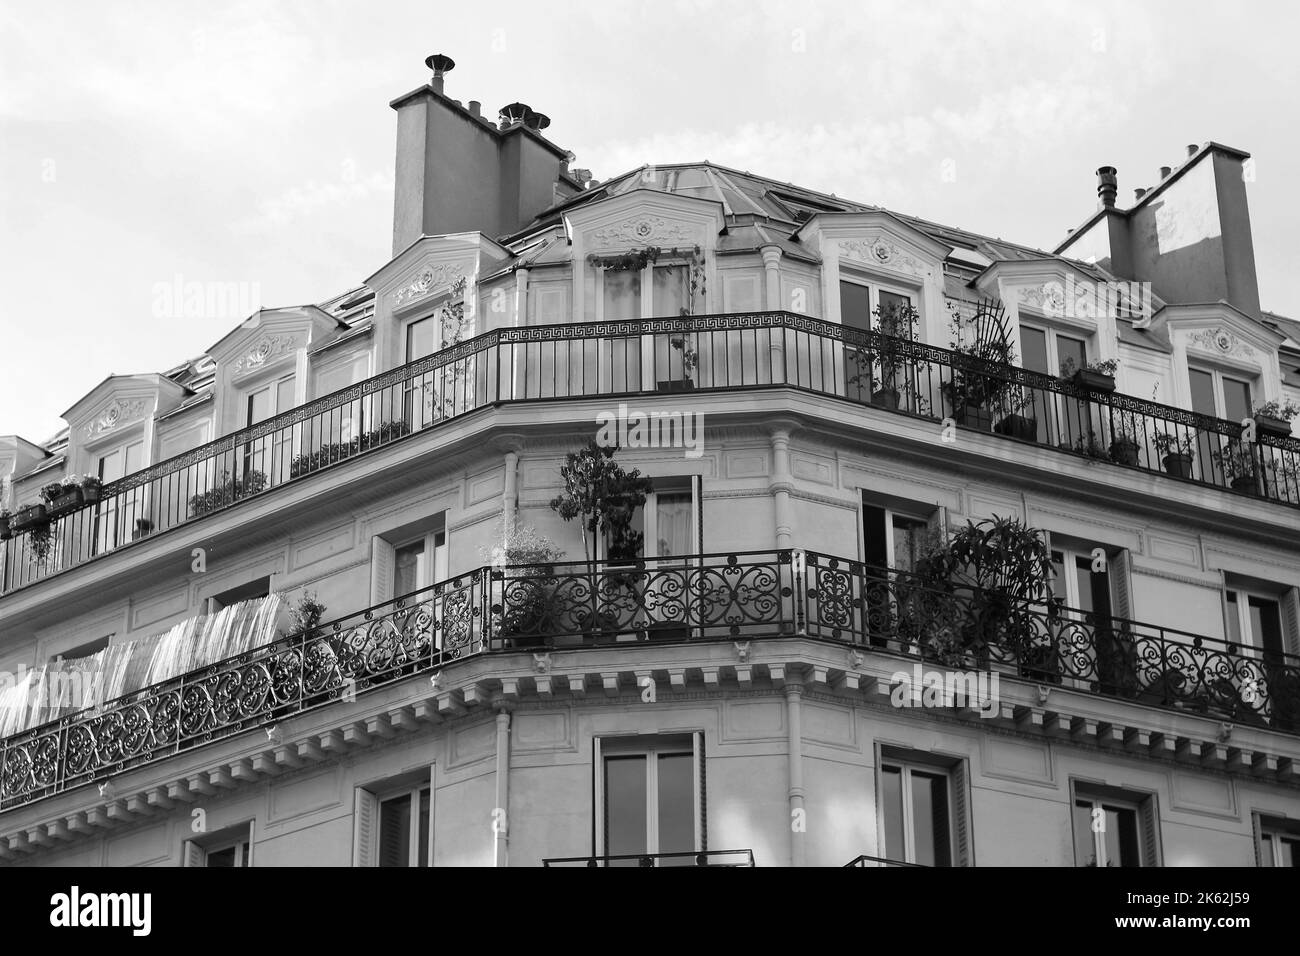 Classic Parisian Architecture. Building Facade with Mansard Roof. Architecture Design. Stock Photo